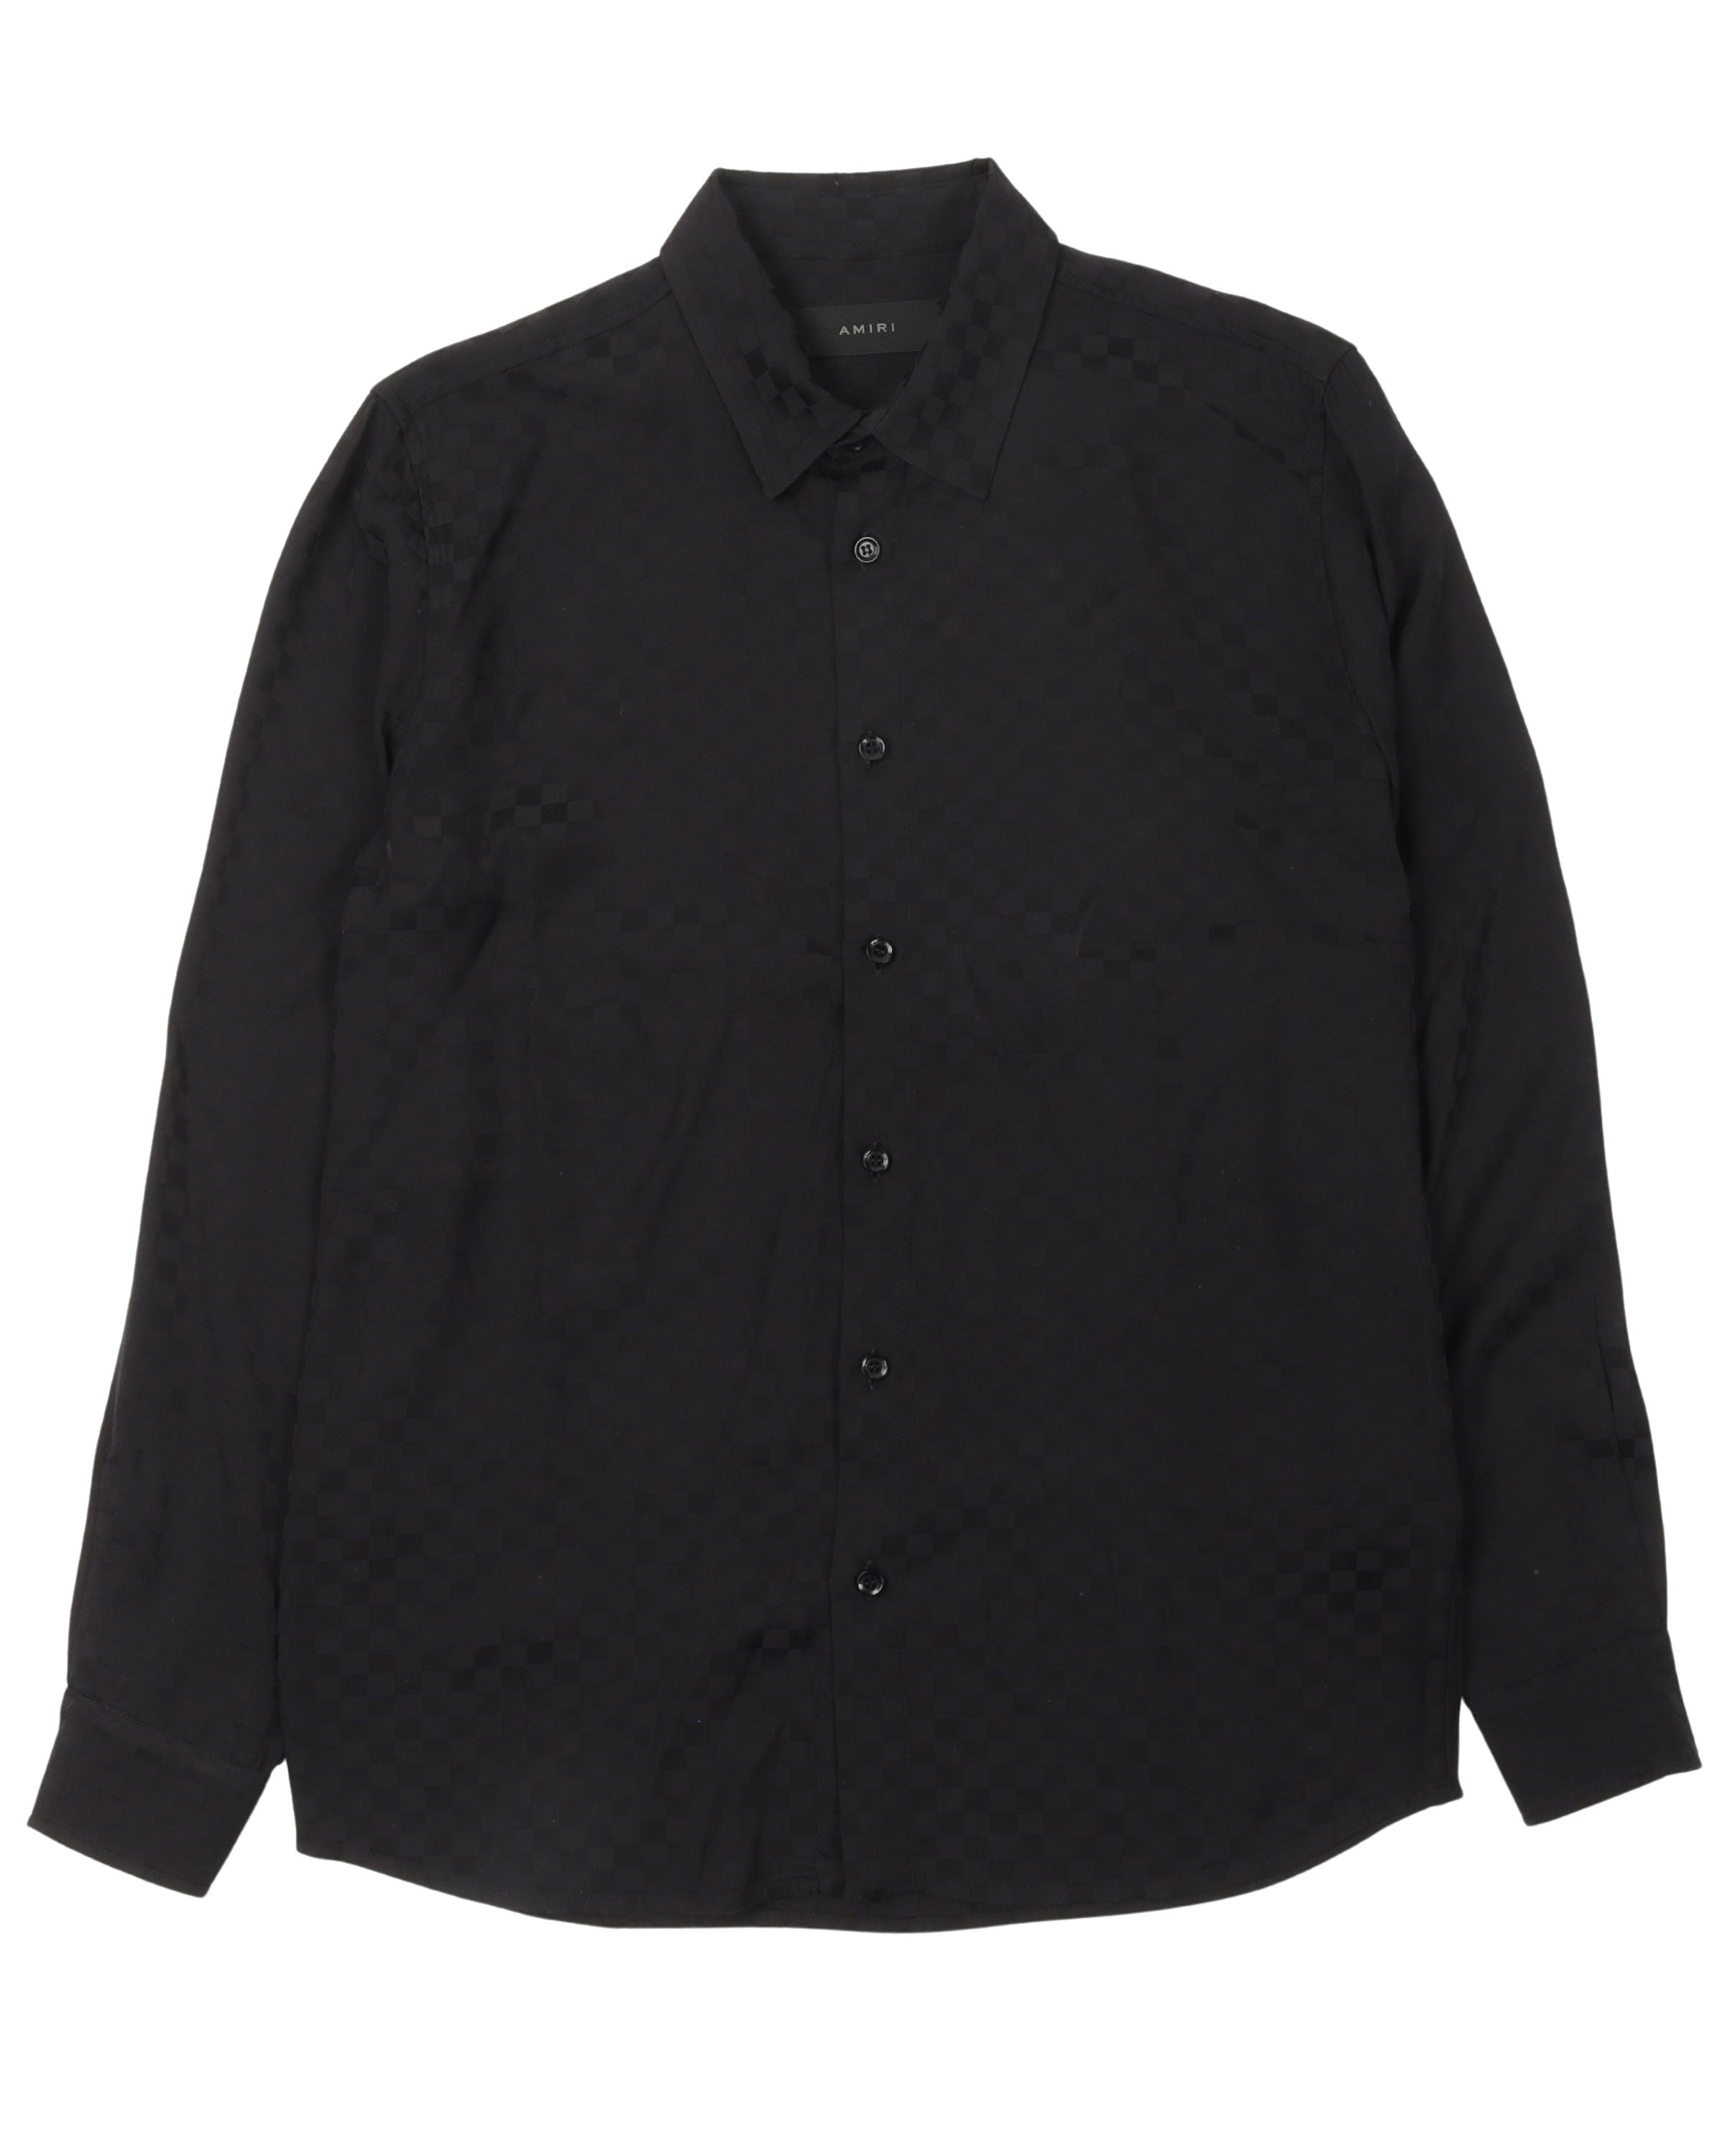 Tonal Checkered Button Up Shirt